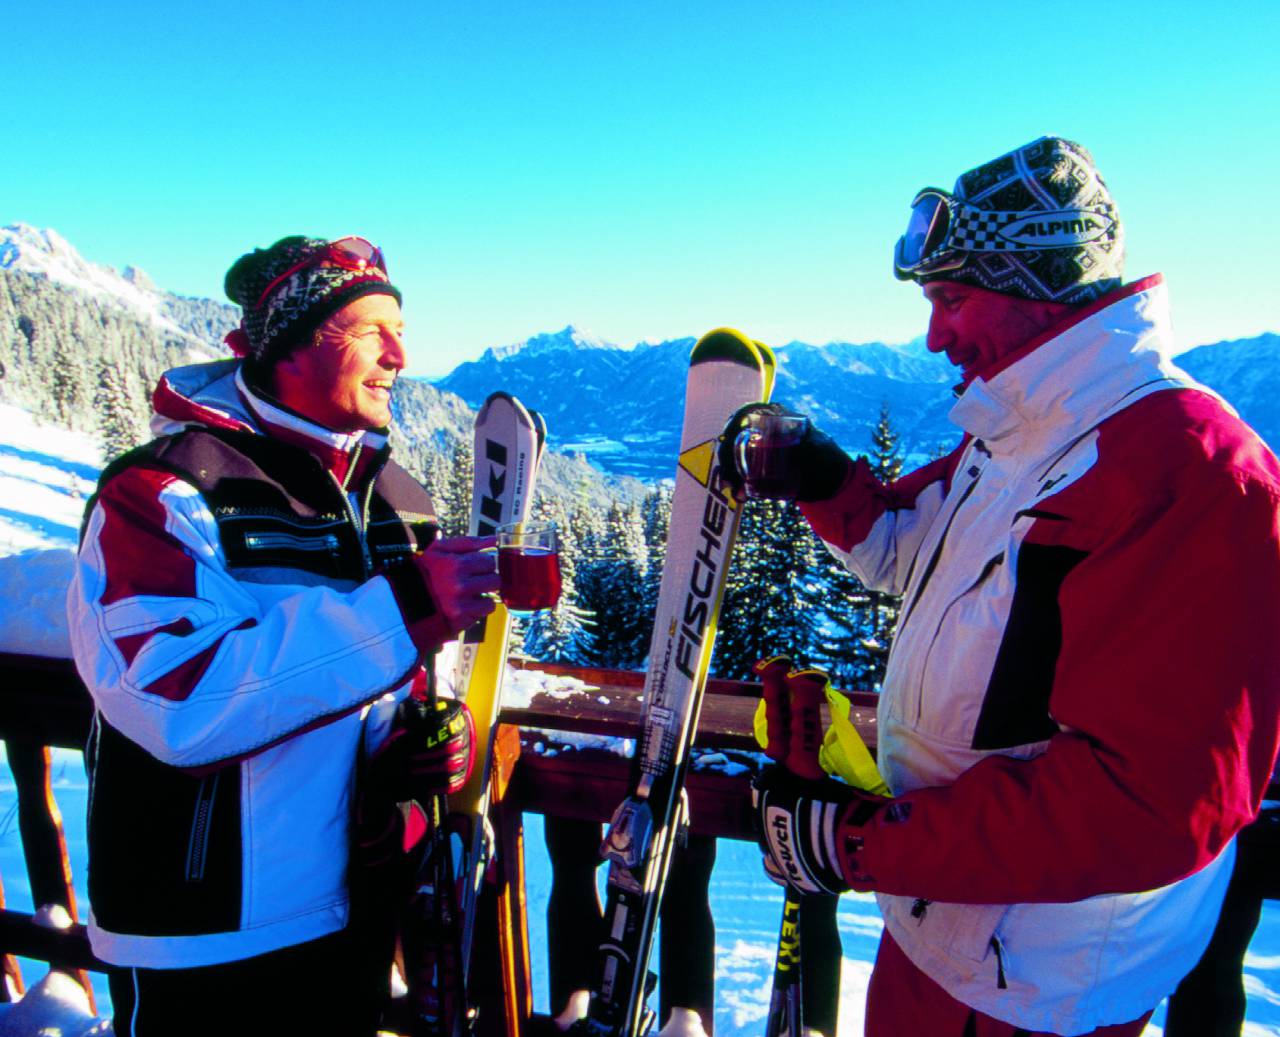 Skiers taking a break with tea in the ski resort